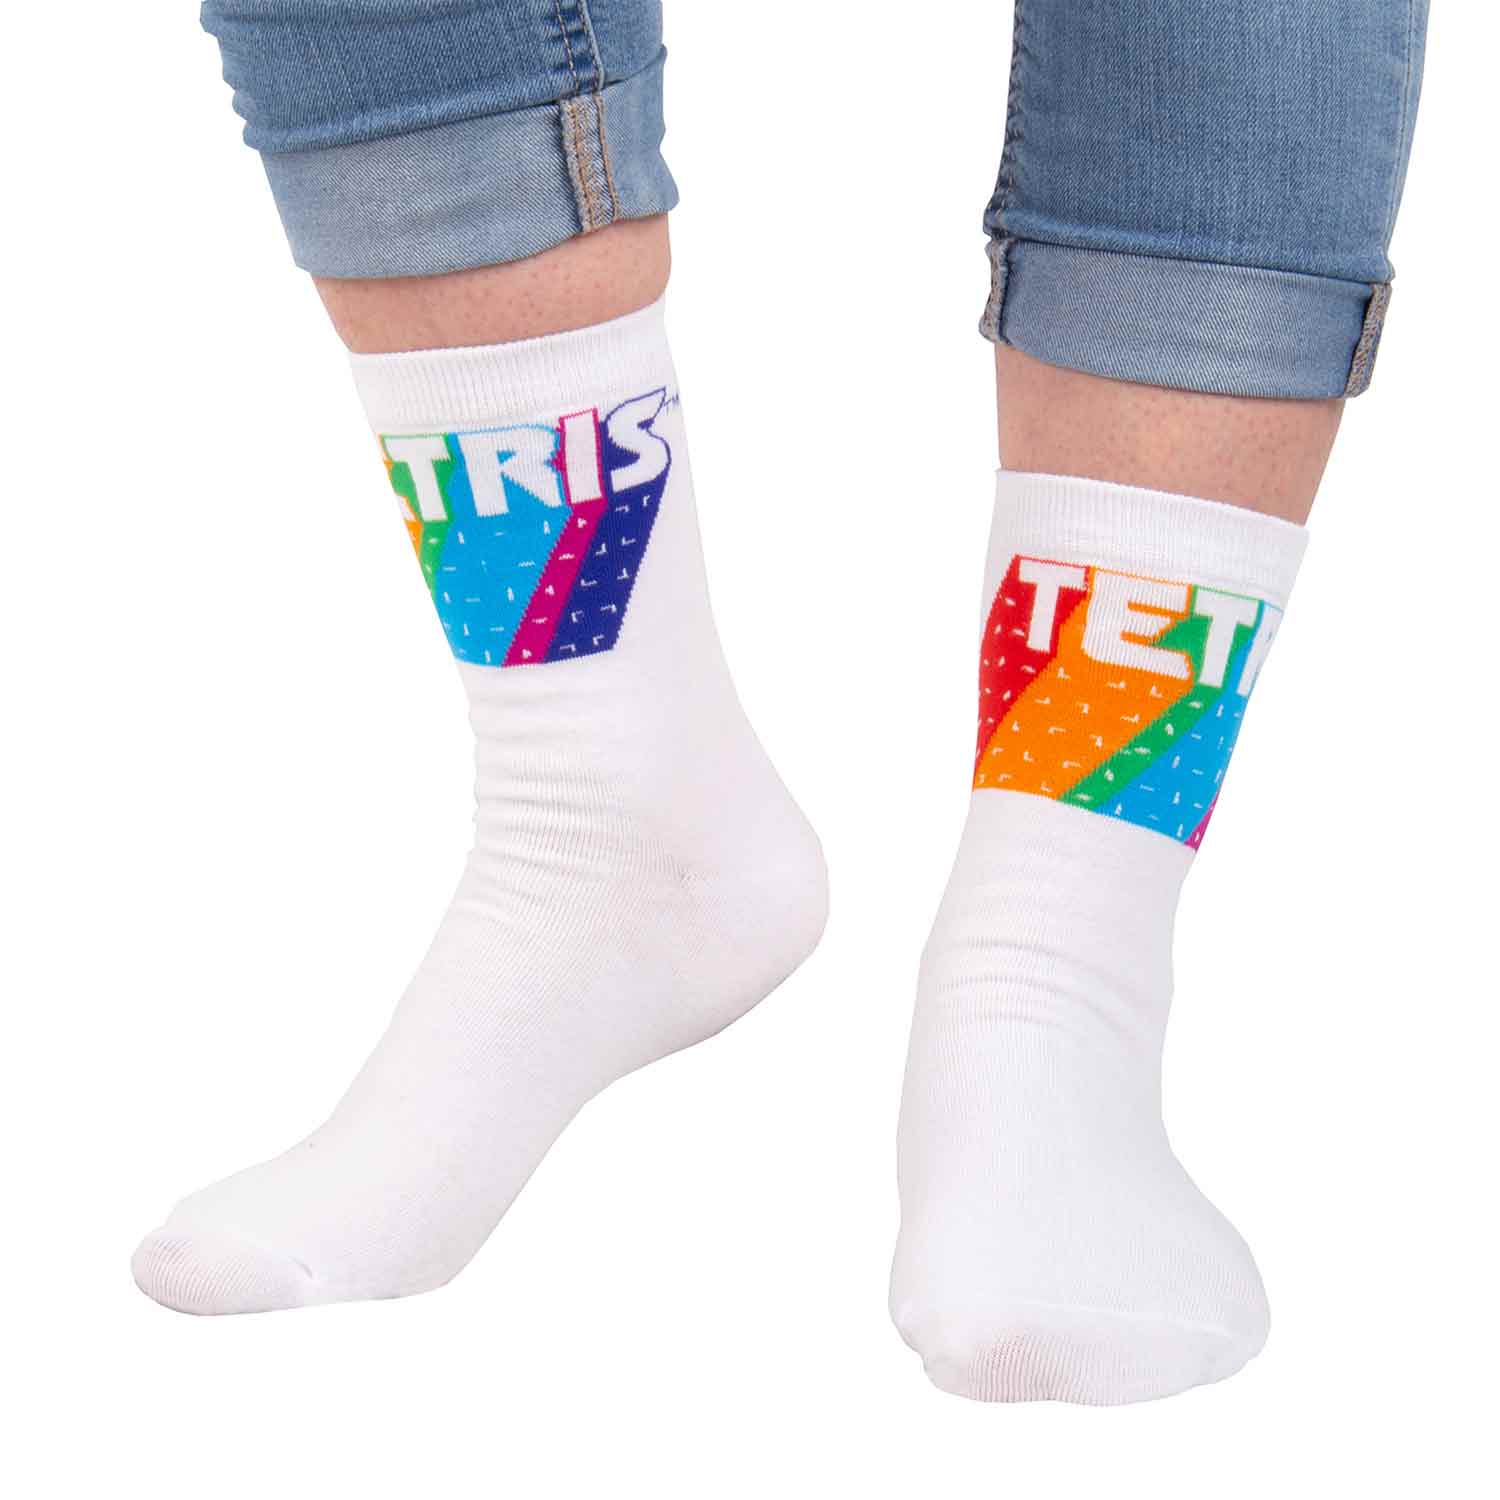 tetris-mug-and-socks